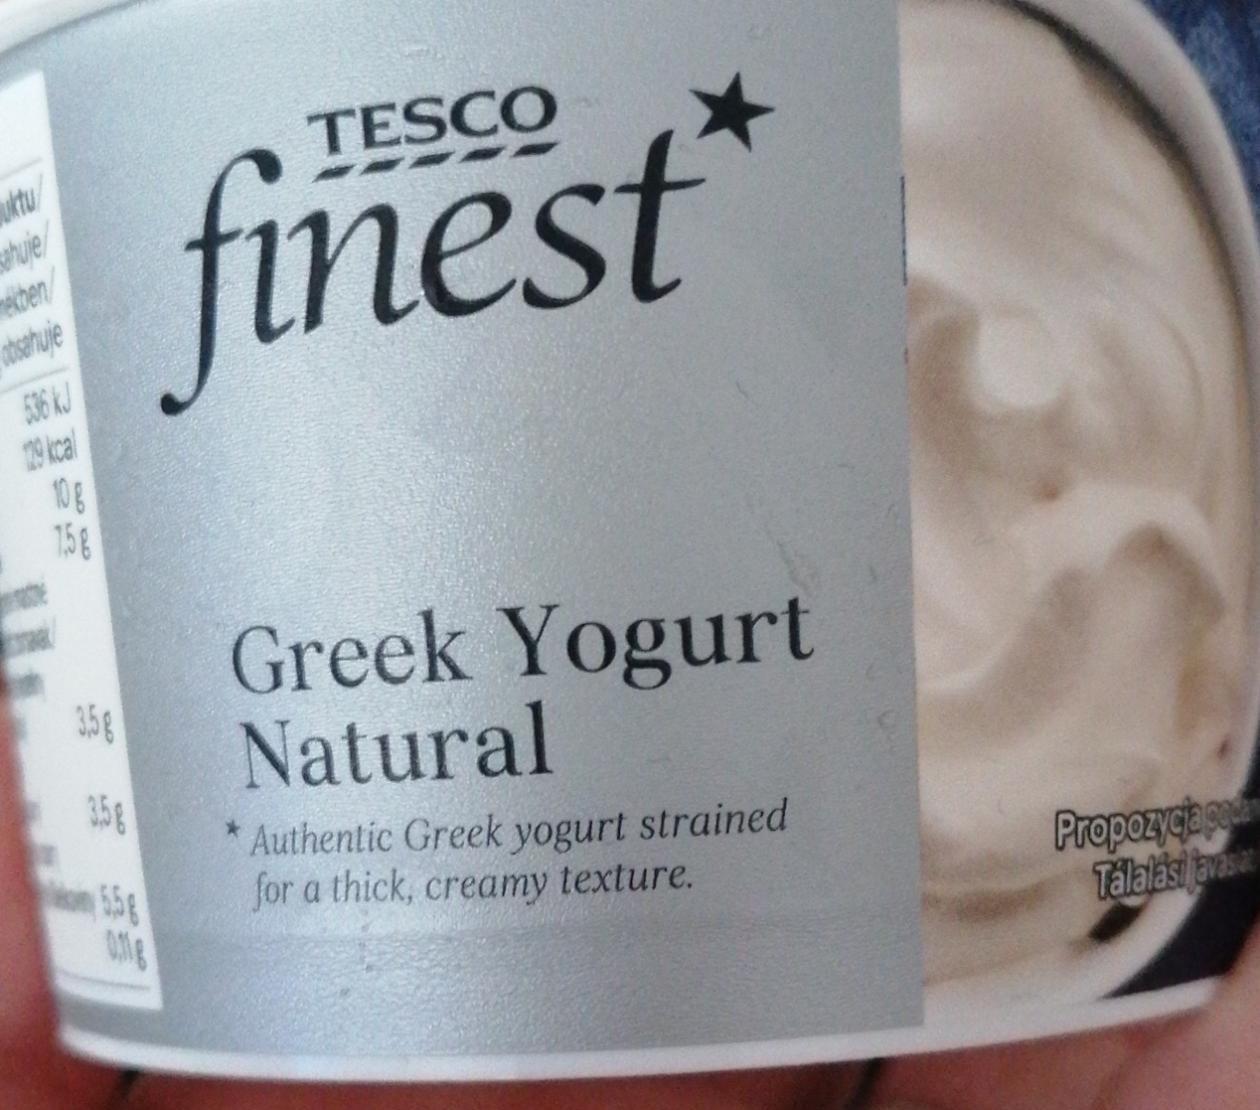 Képek - Greek yogurt natural Tesco Finest